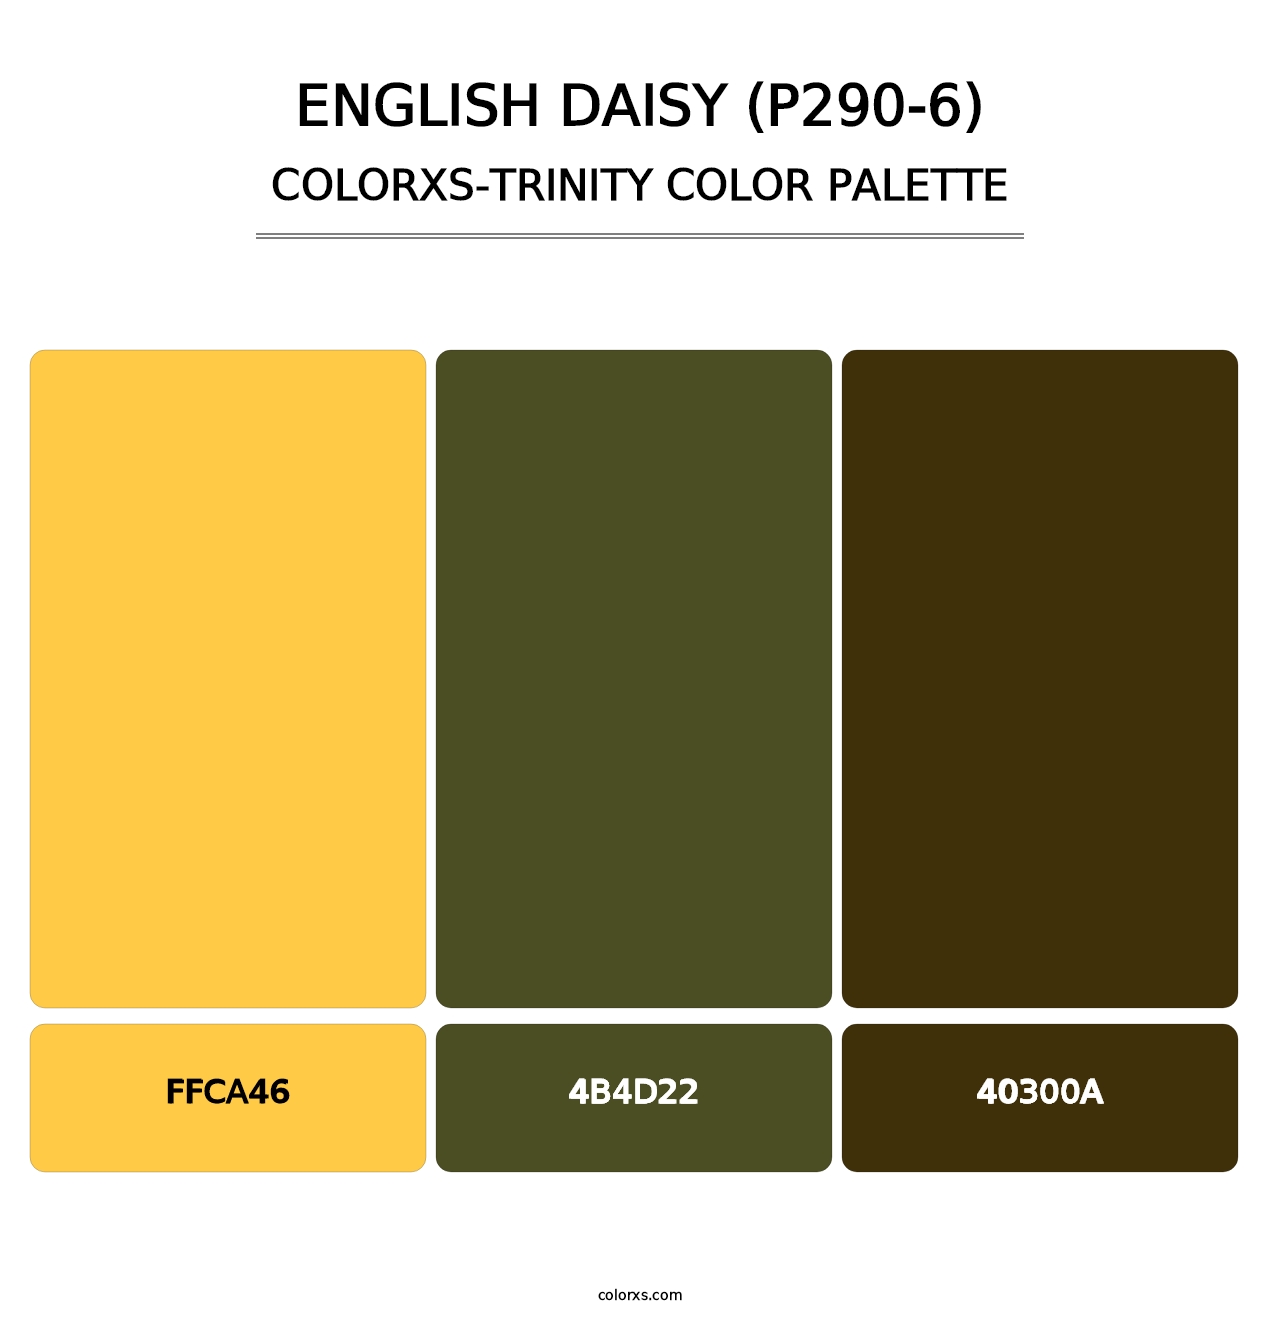 English Daisy (P290-6) - Colorxs Trinity Palette